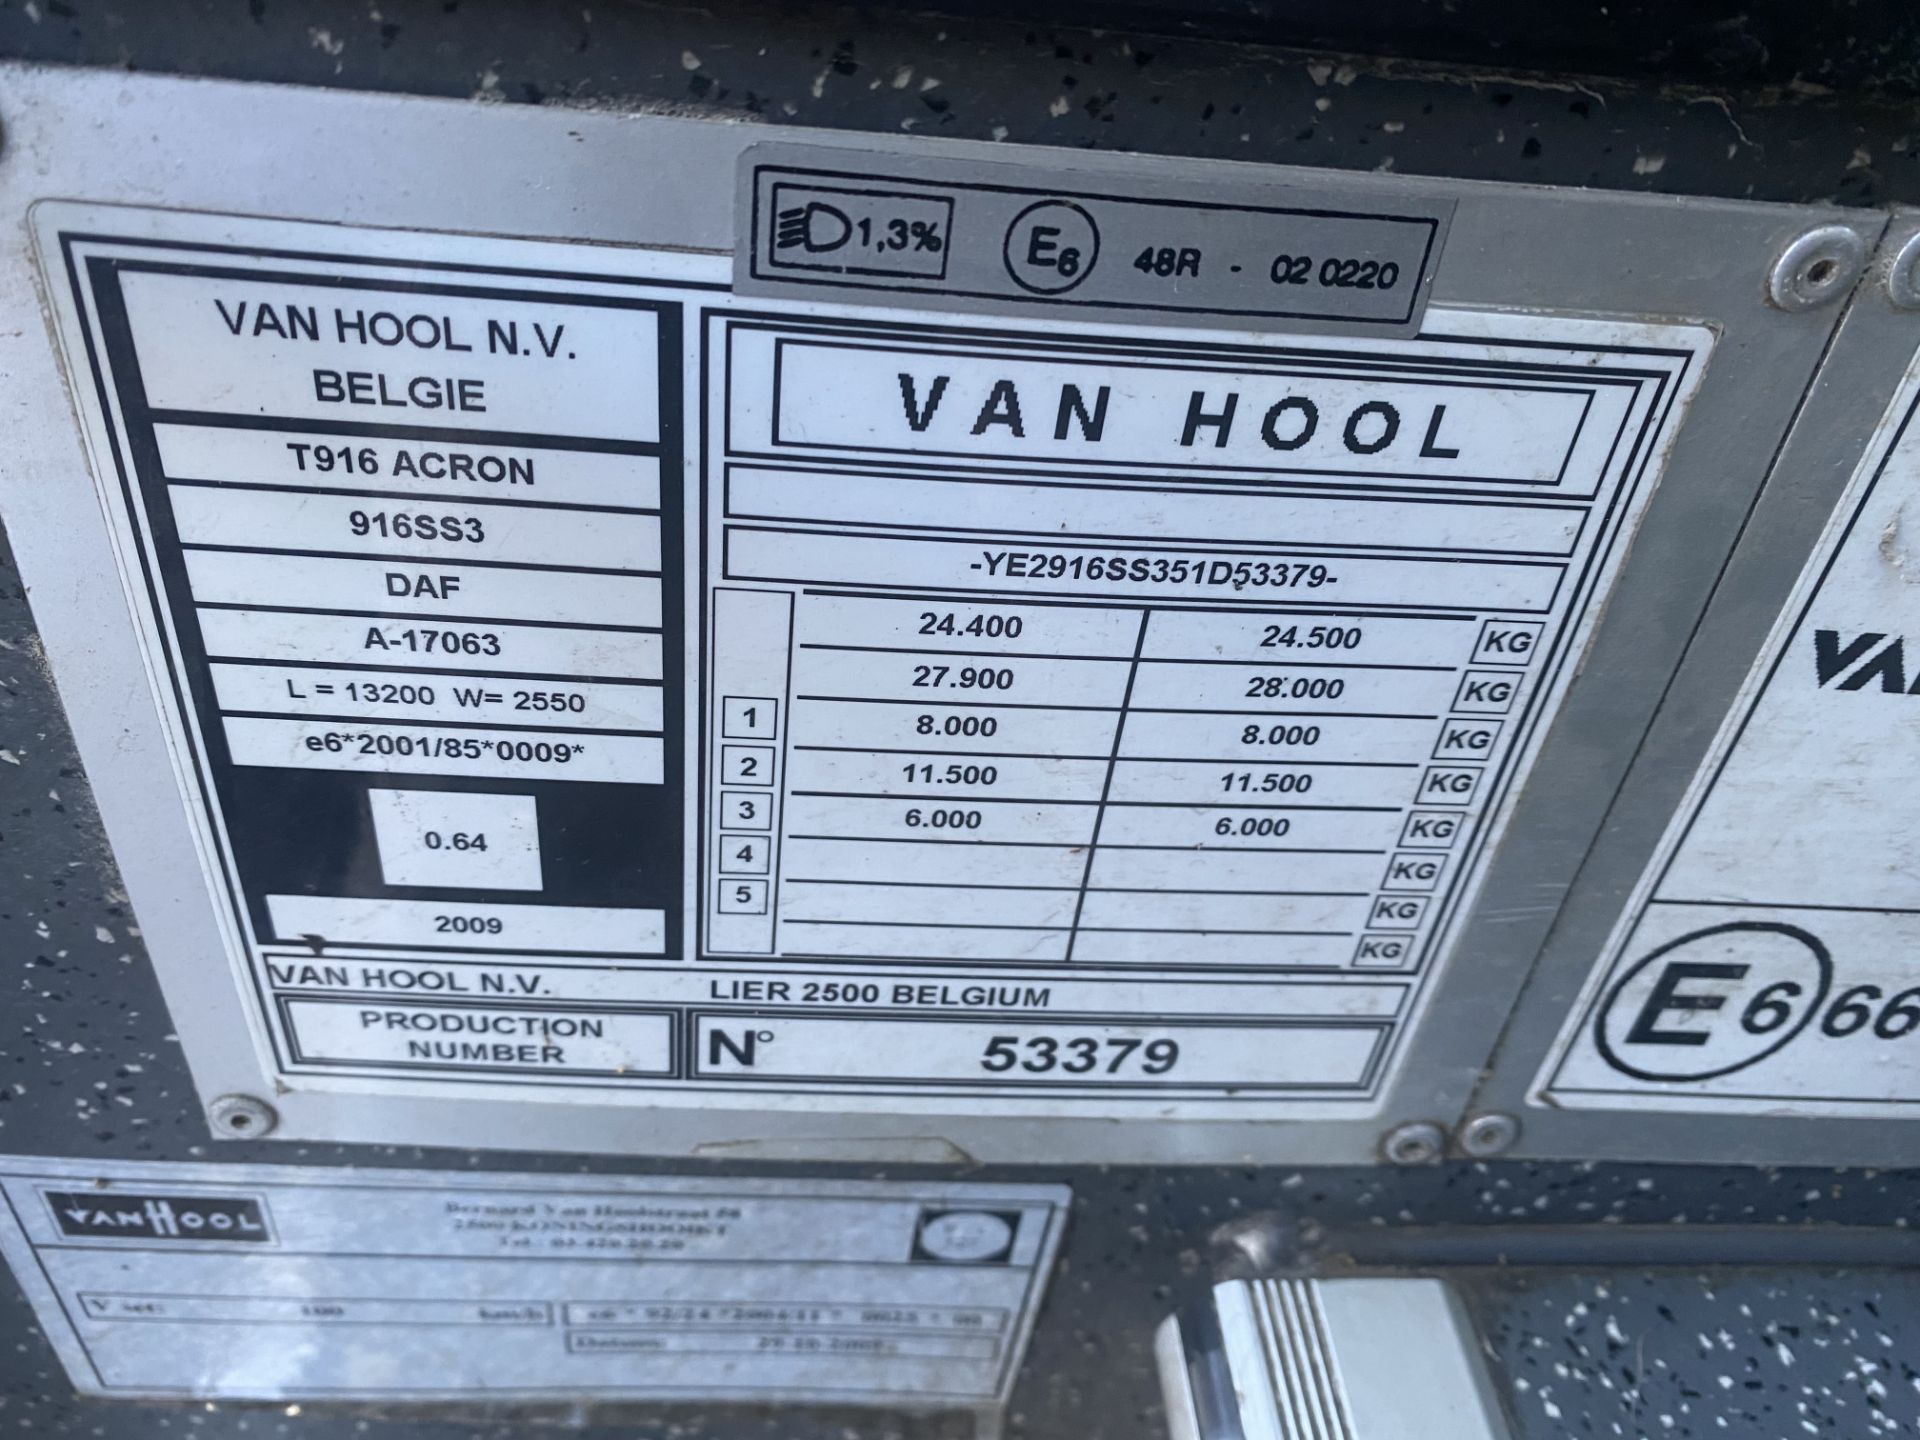 (2009) Vanhool Daf Astrobel 58+2 seater coach, registration M33NEC, odometer reading 786795 Km, - Image 18 of 20